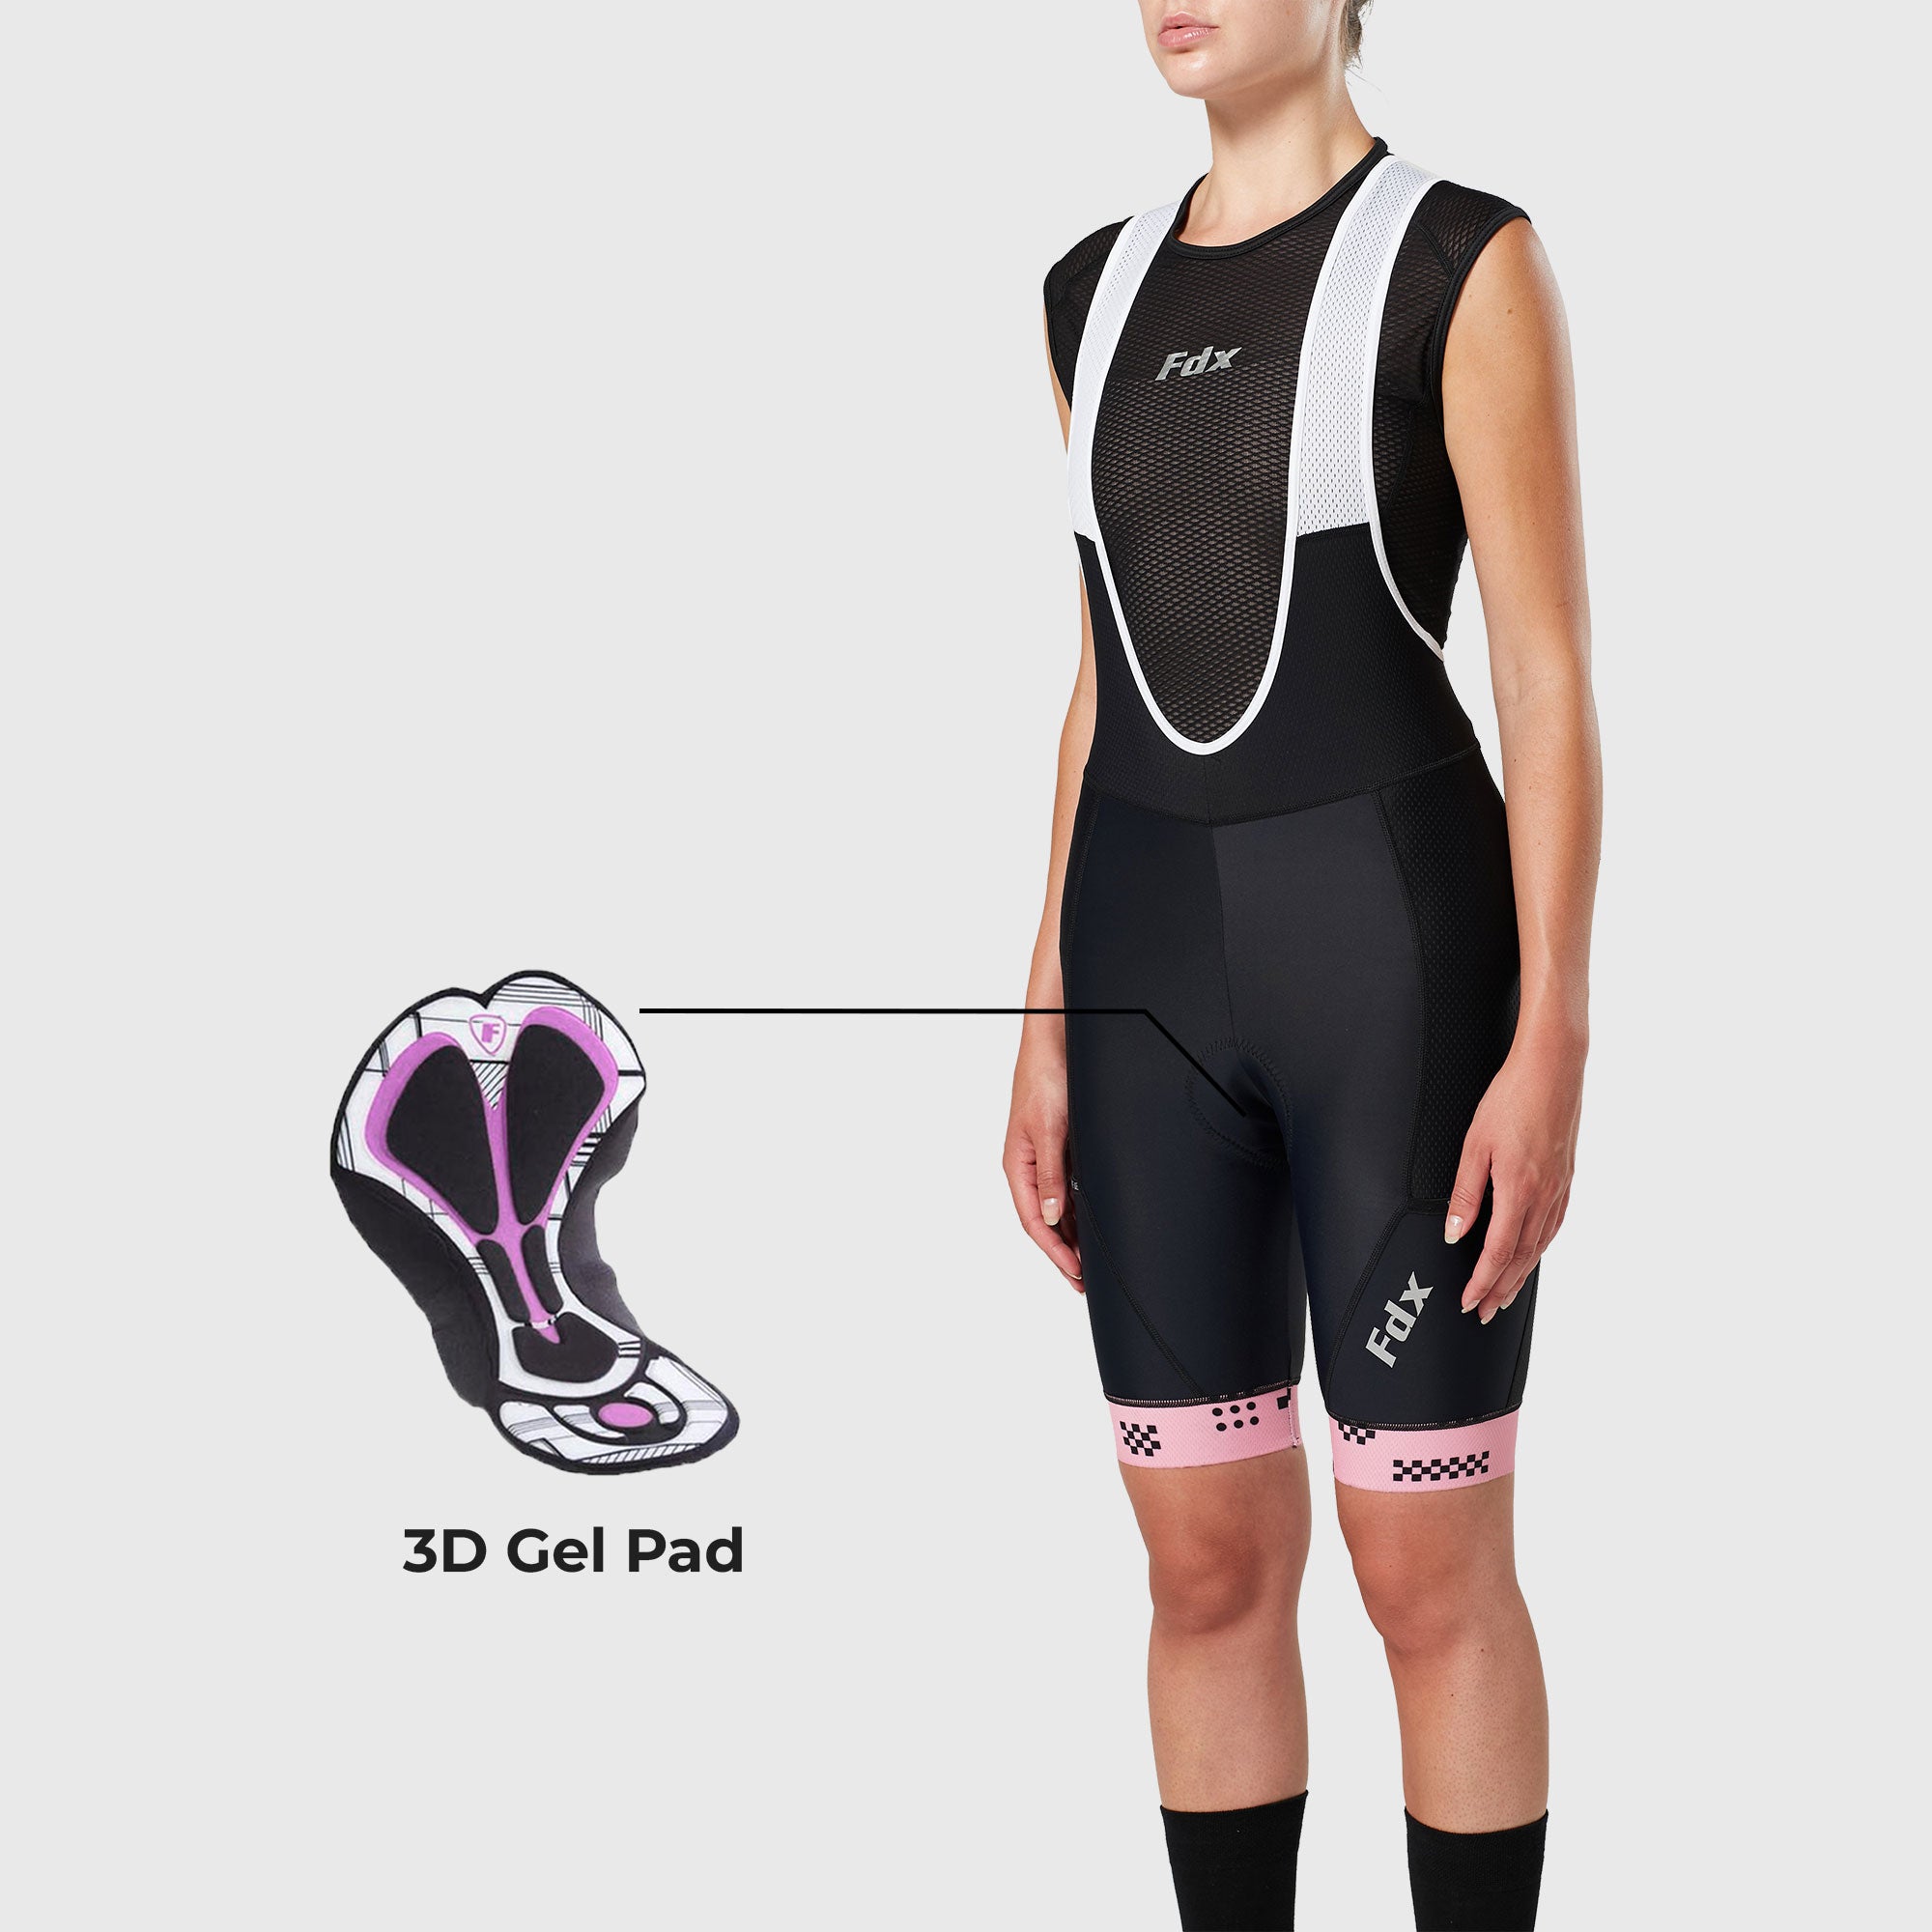 Fdx All Day Tea Pink Women's Padded Summer Cycling Cargo Bib Shorts